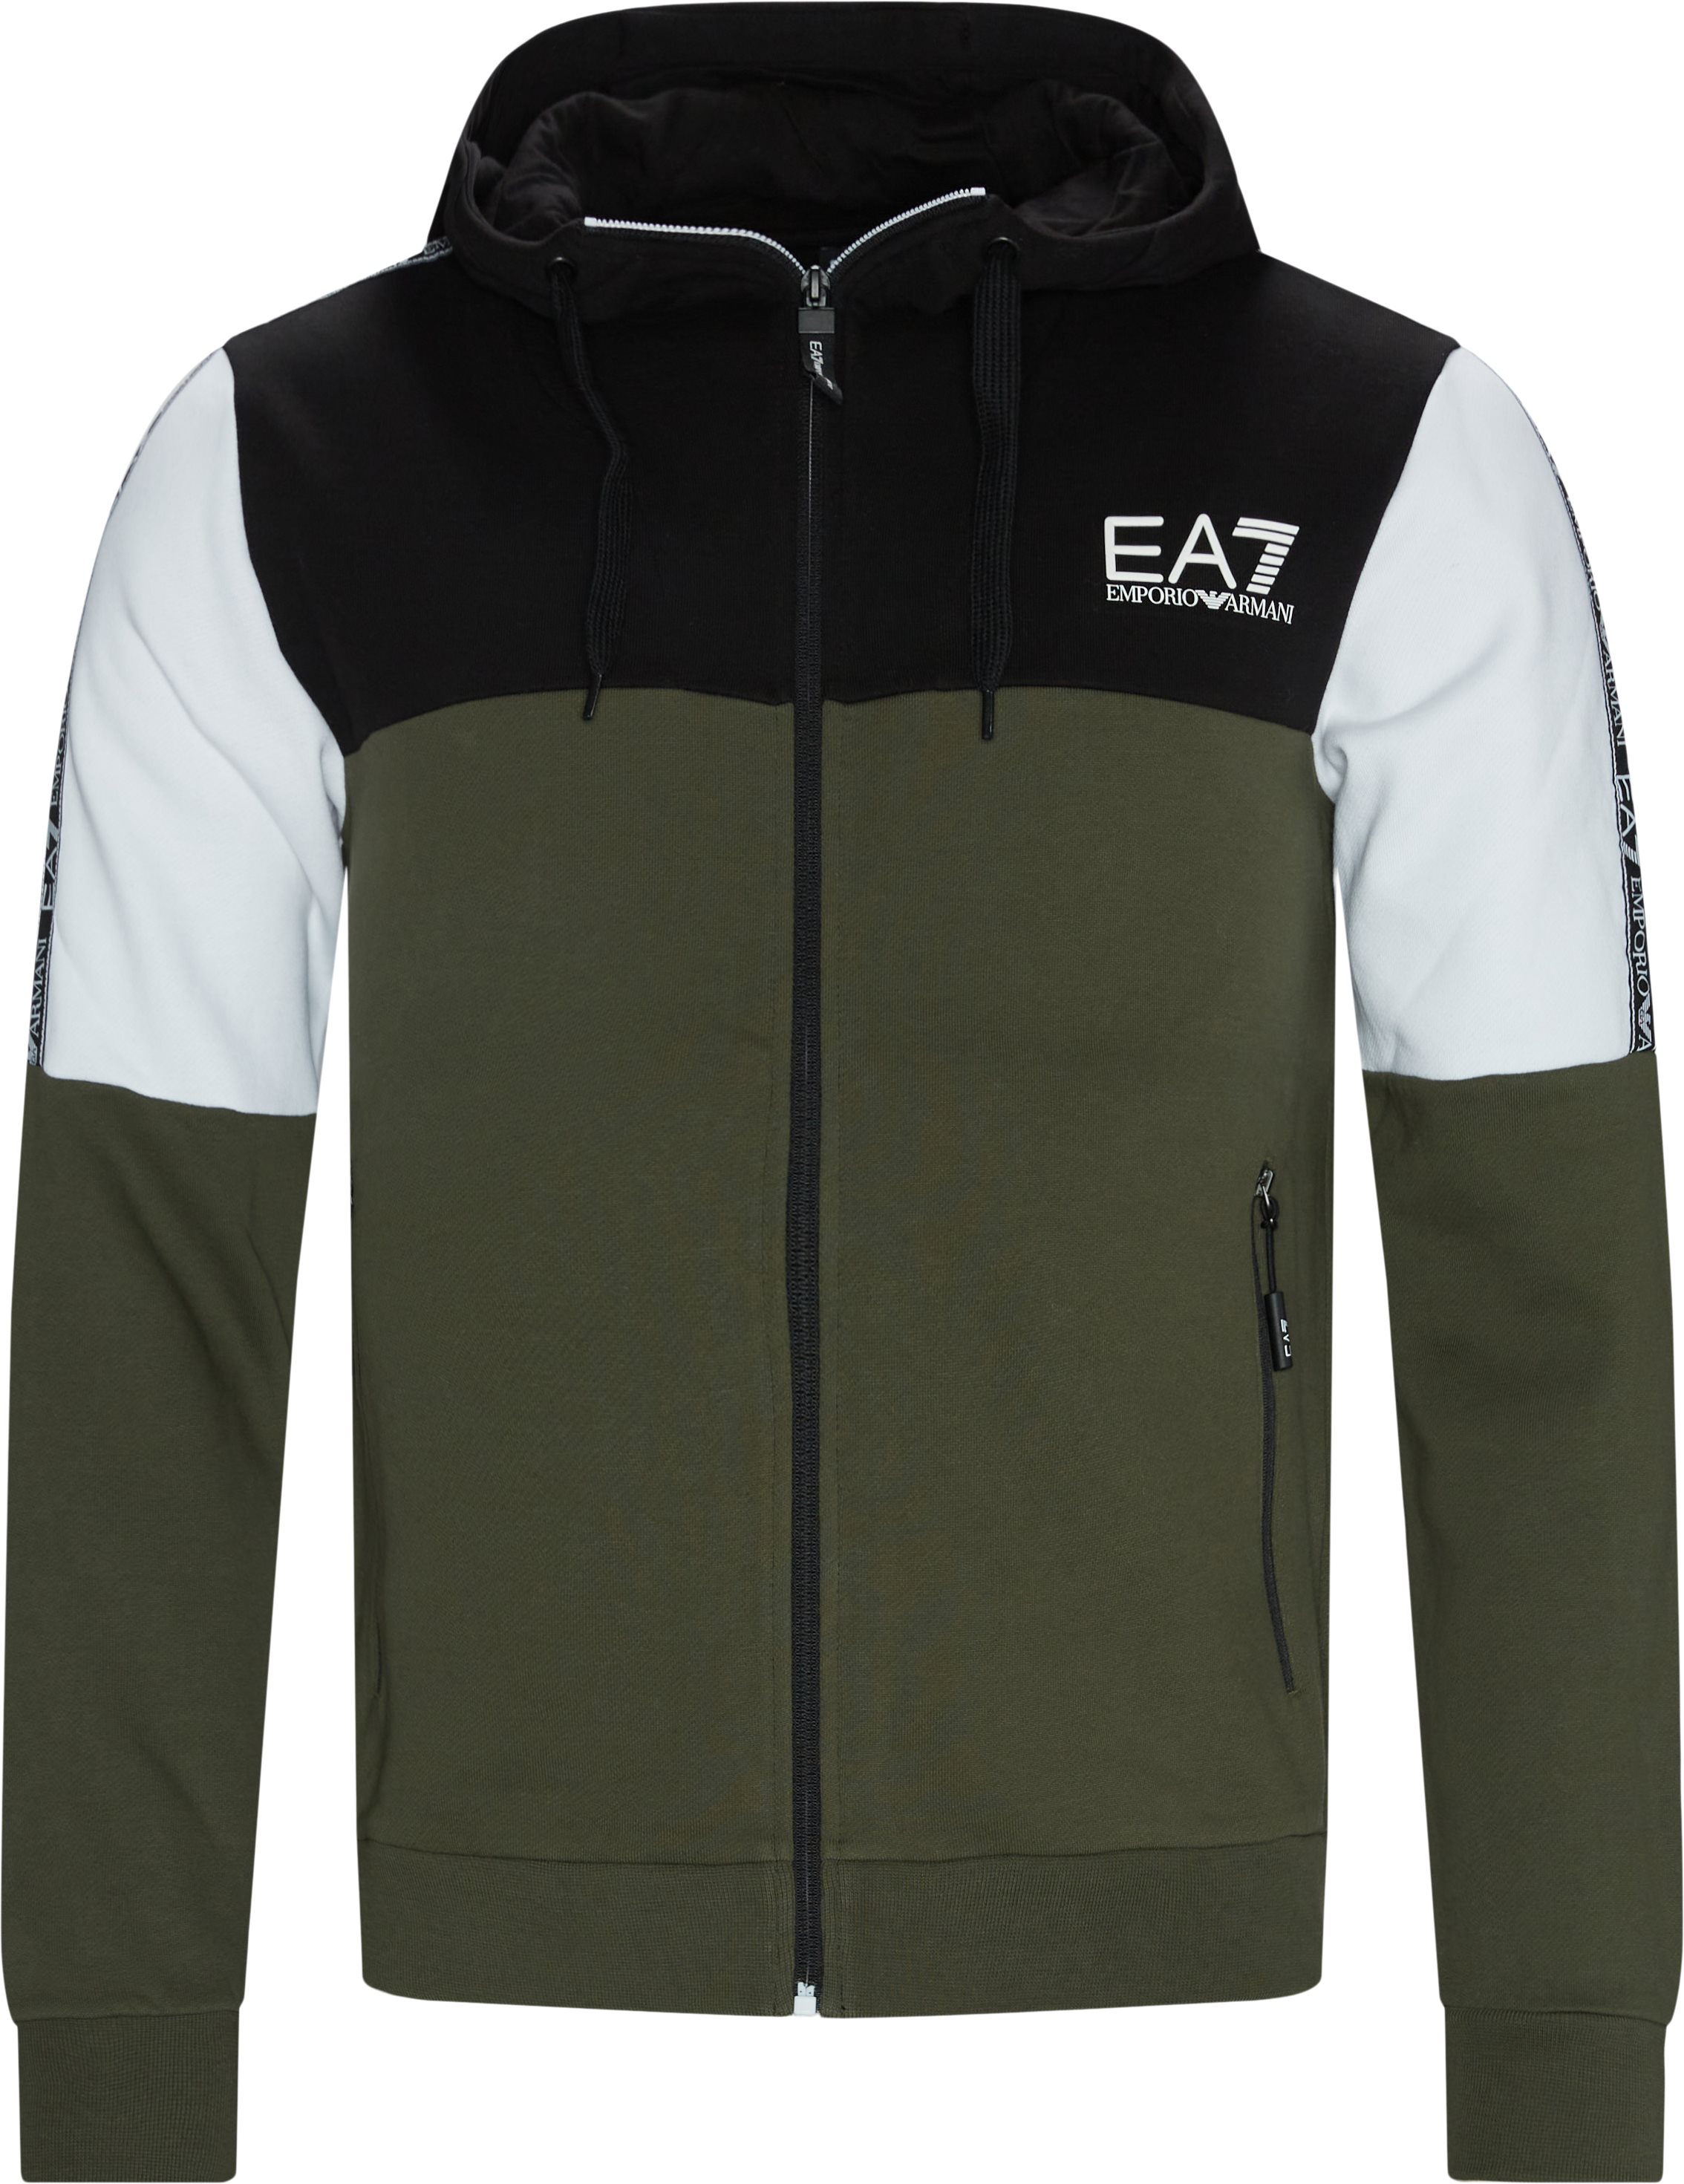 Pj07z-6kpv63 Zip Sweatshirt - Sweatshirts - Regular fit - Green